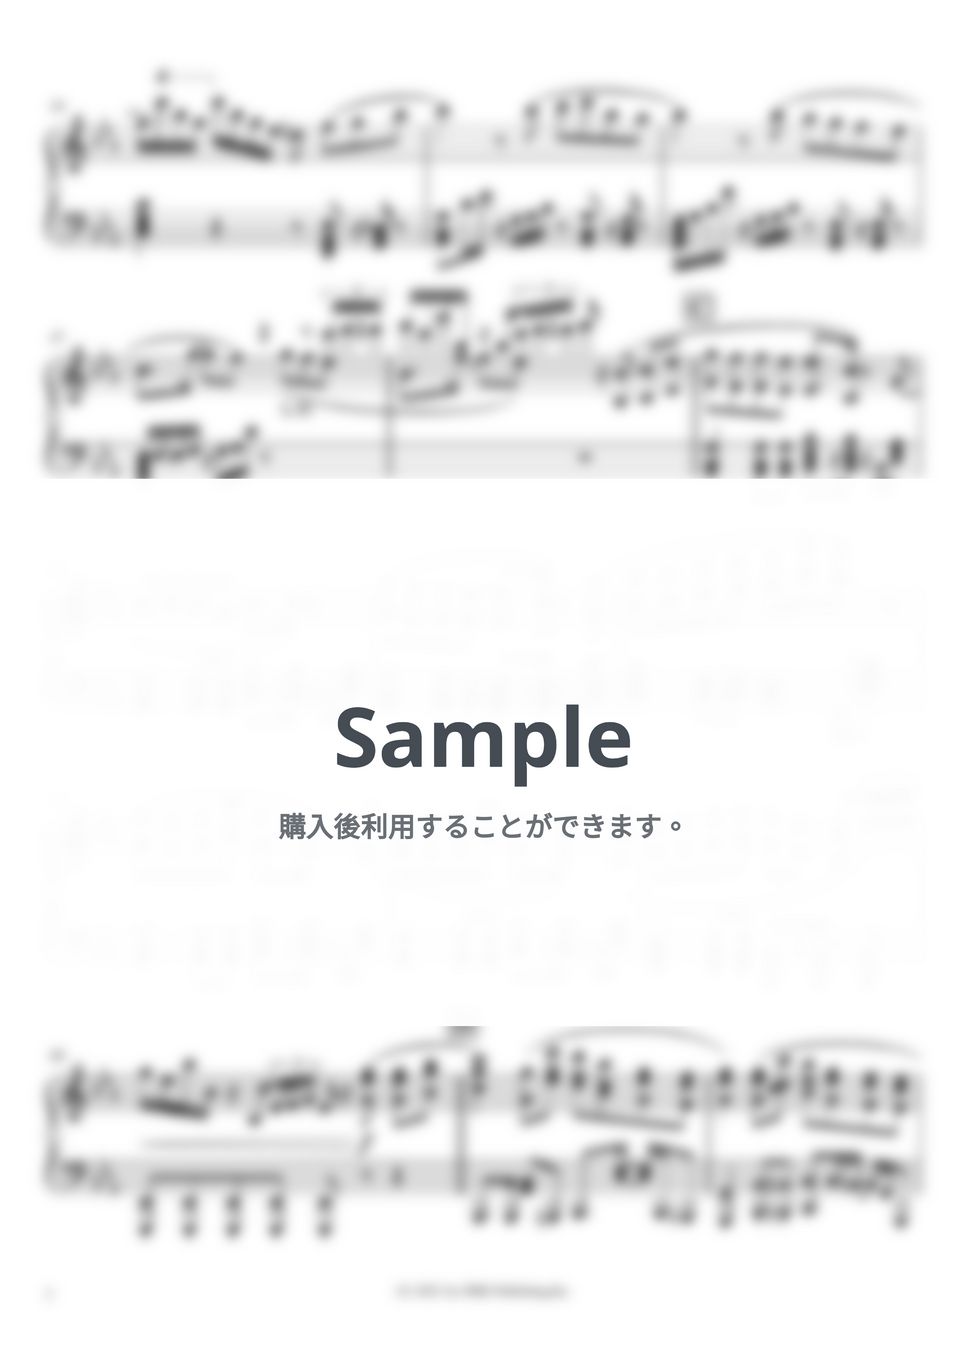 YOASOBI with ミドリーズ - ツバメ (ピアノソロ / 上級) by SuperMomoFactory